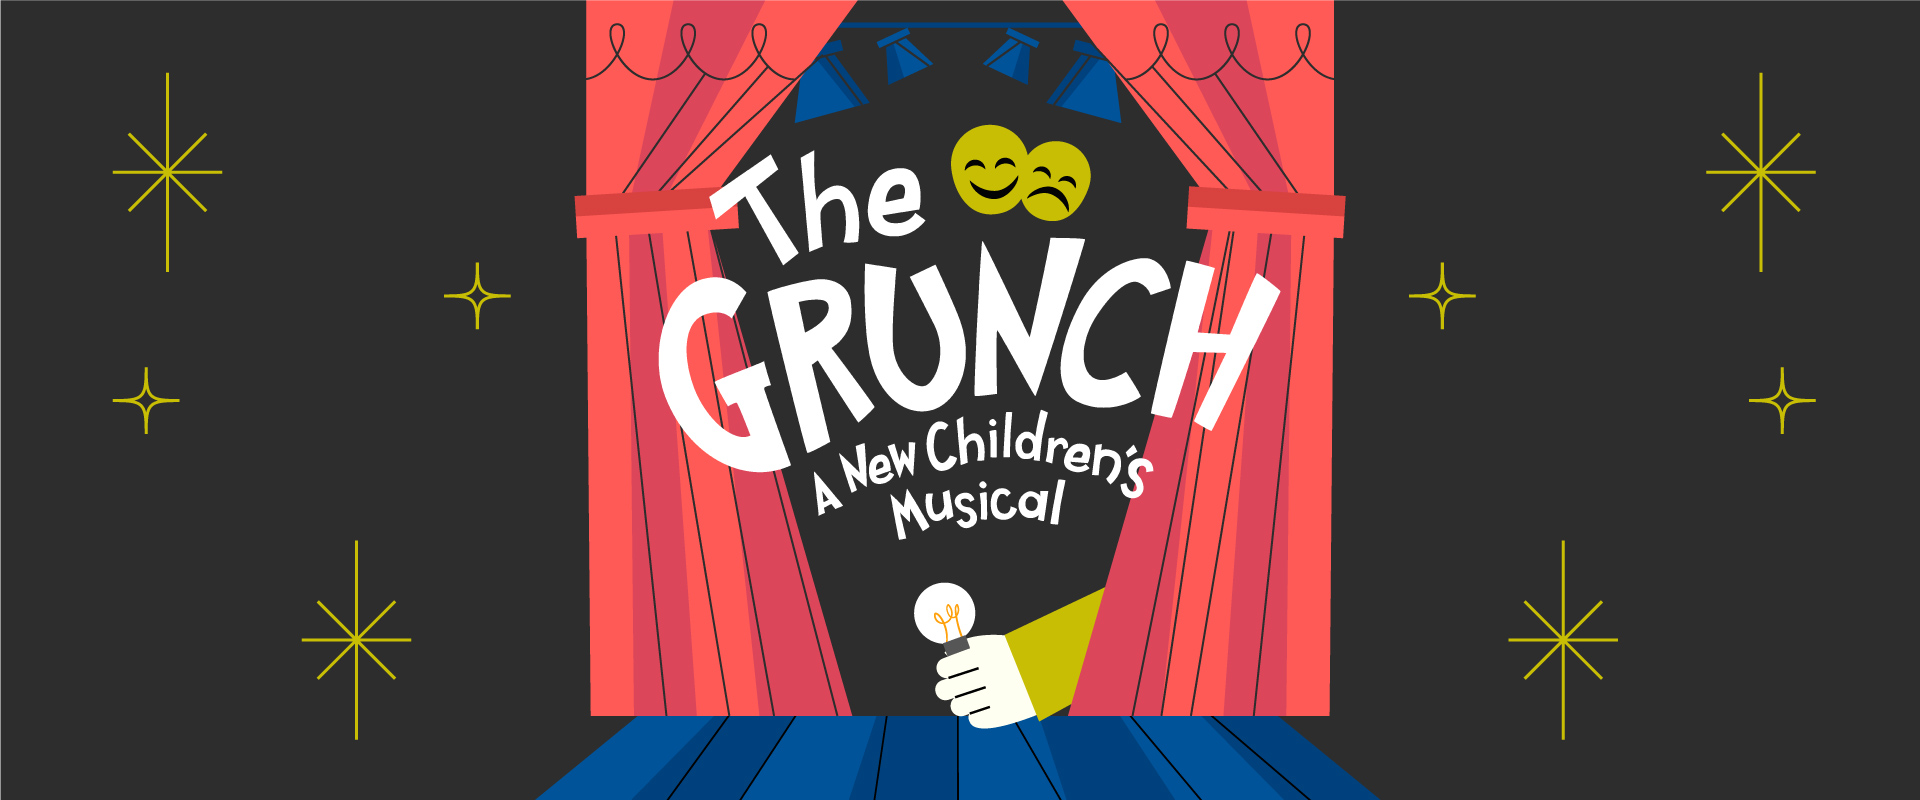 The Grunch Poster Artwork Web Banner